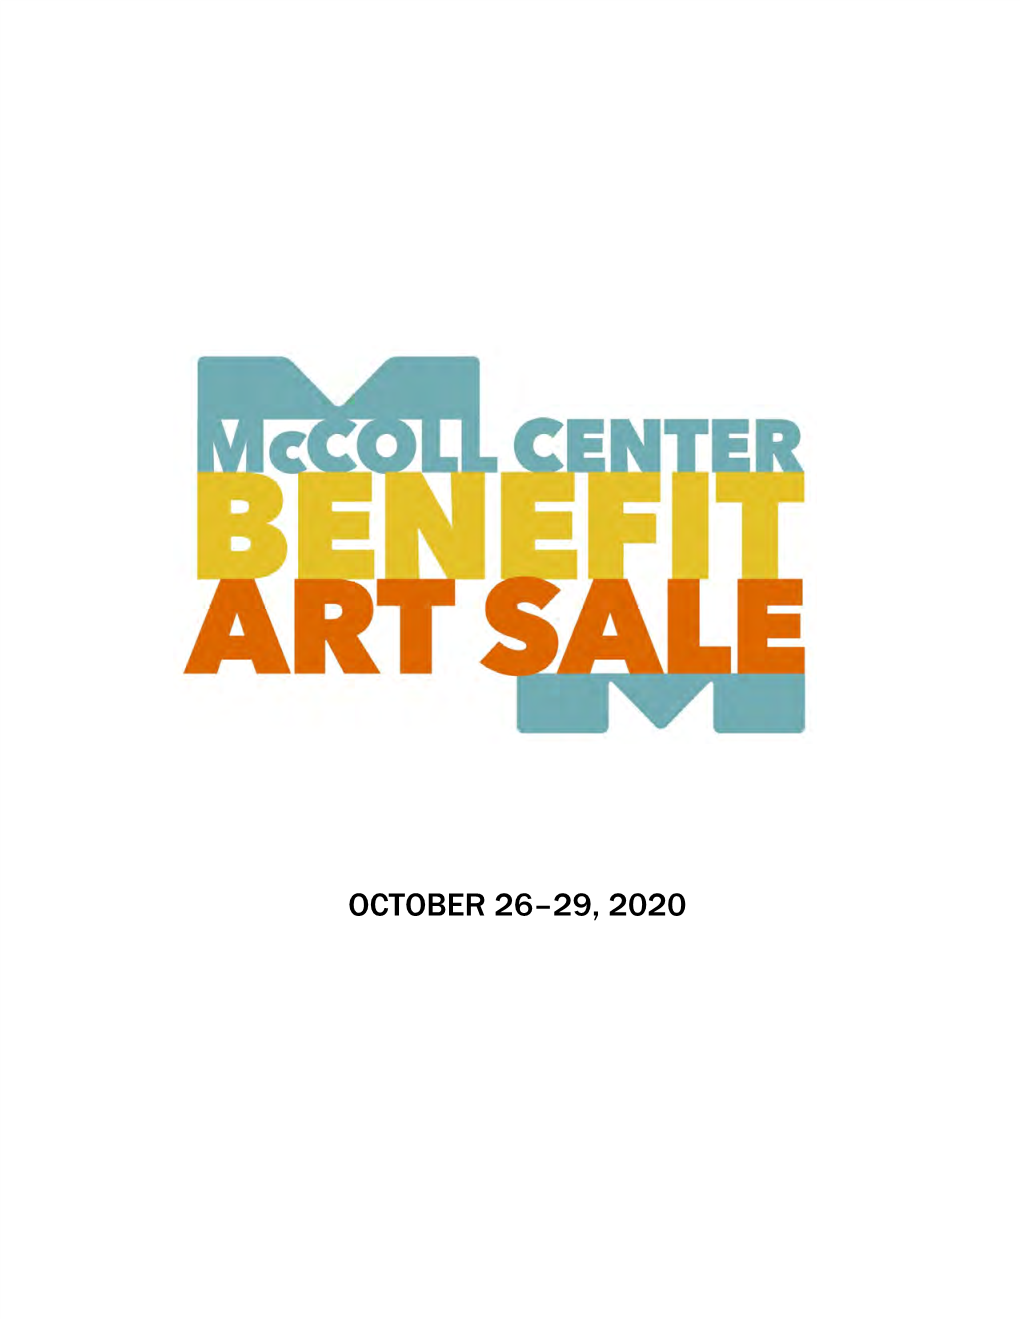 The Official 2020 Benefit Art Sale Catalog